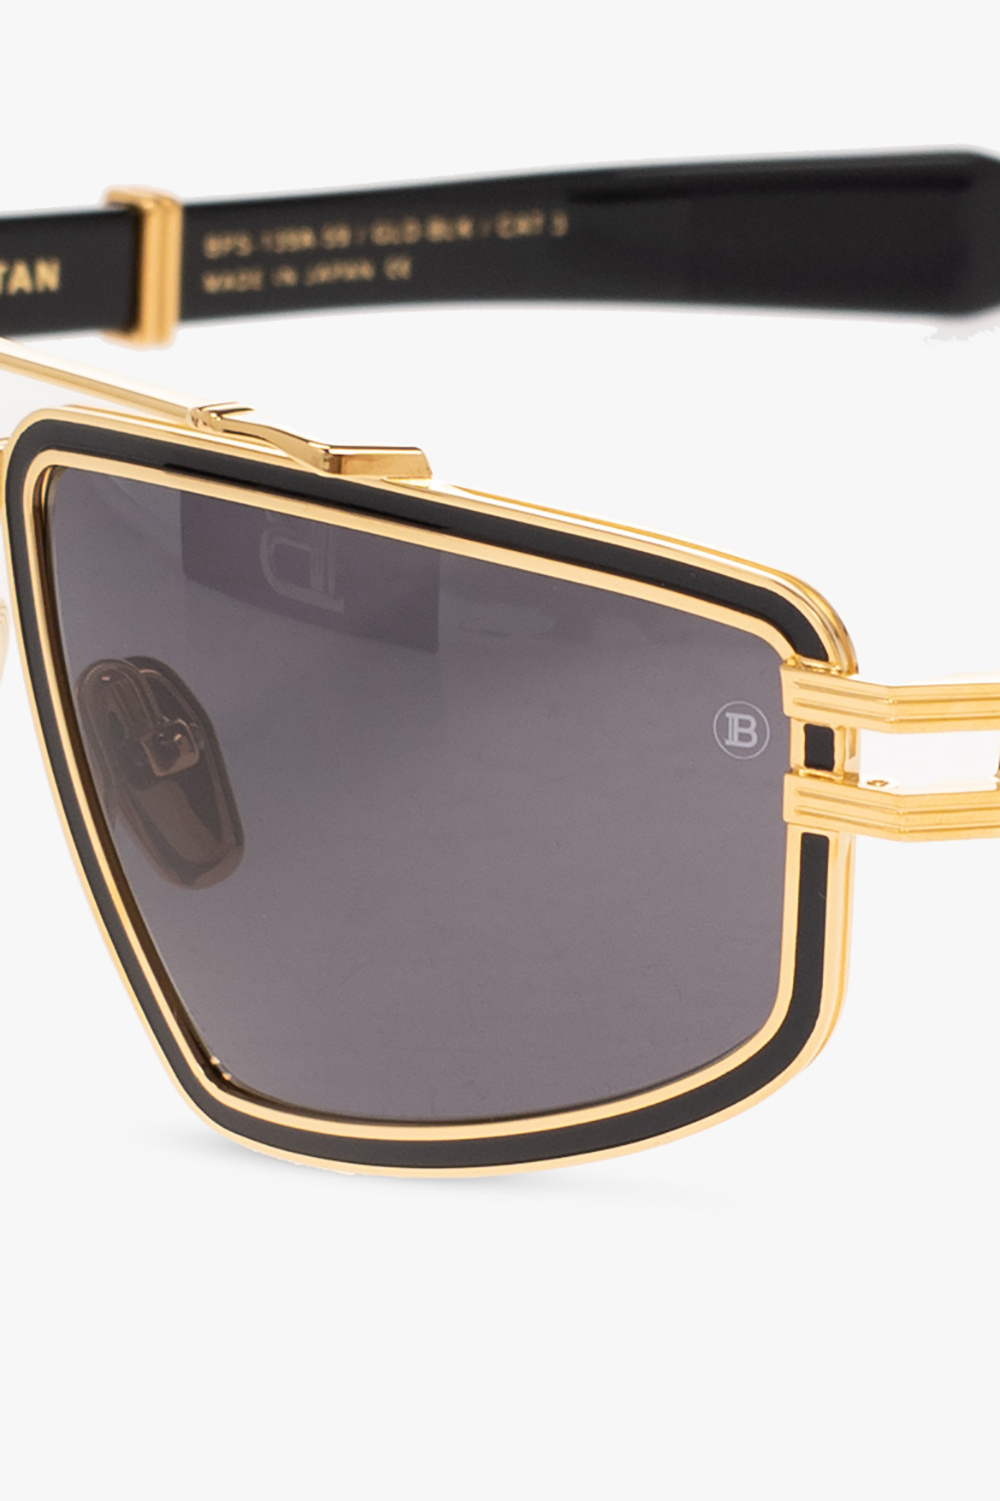 Buy Titan Sunglasses Online for Men And Women - EyeMyEye-mncb.edu.vn